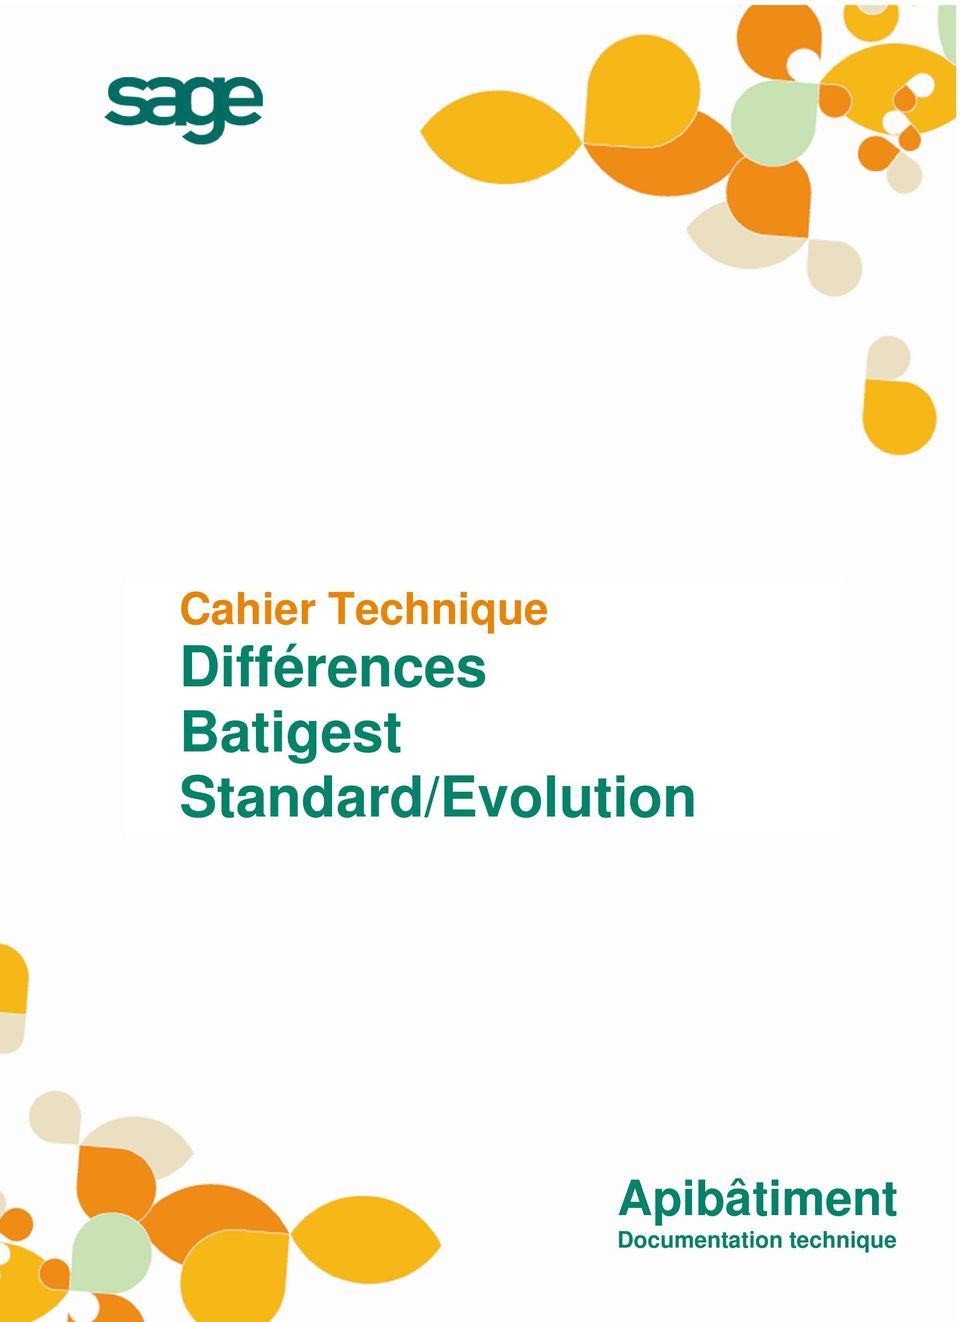 Standard/Evolution